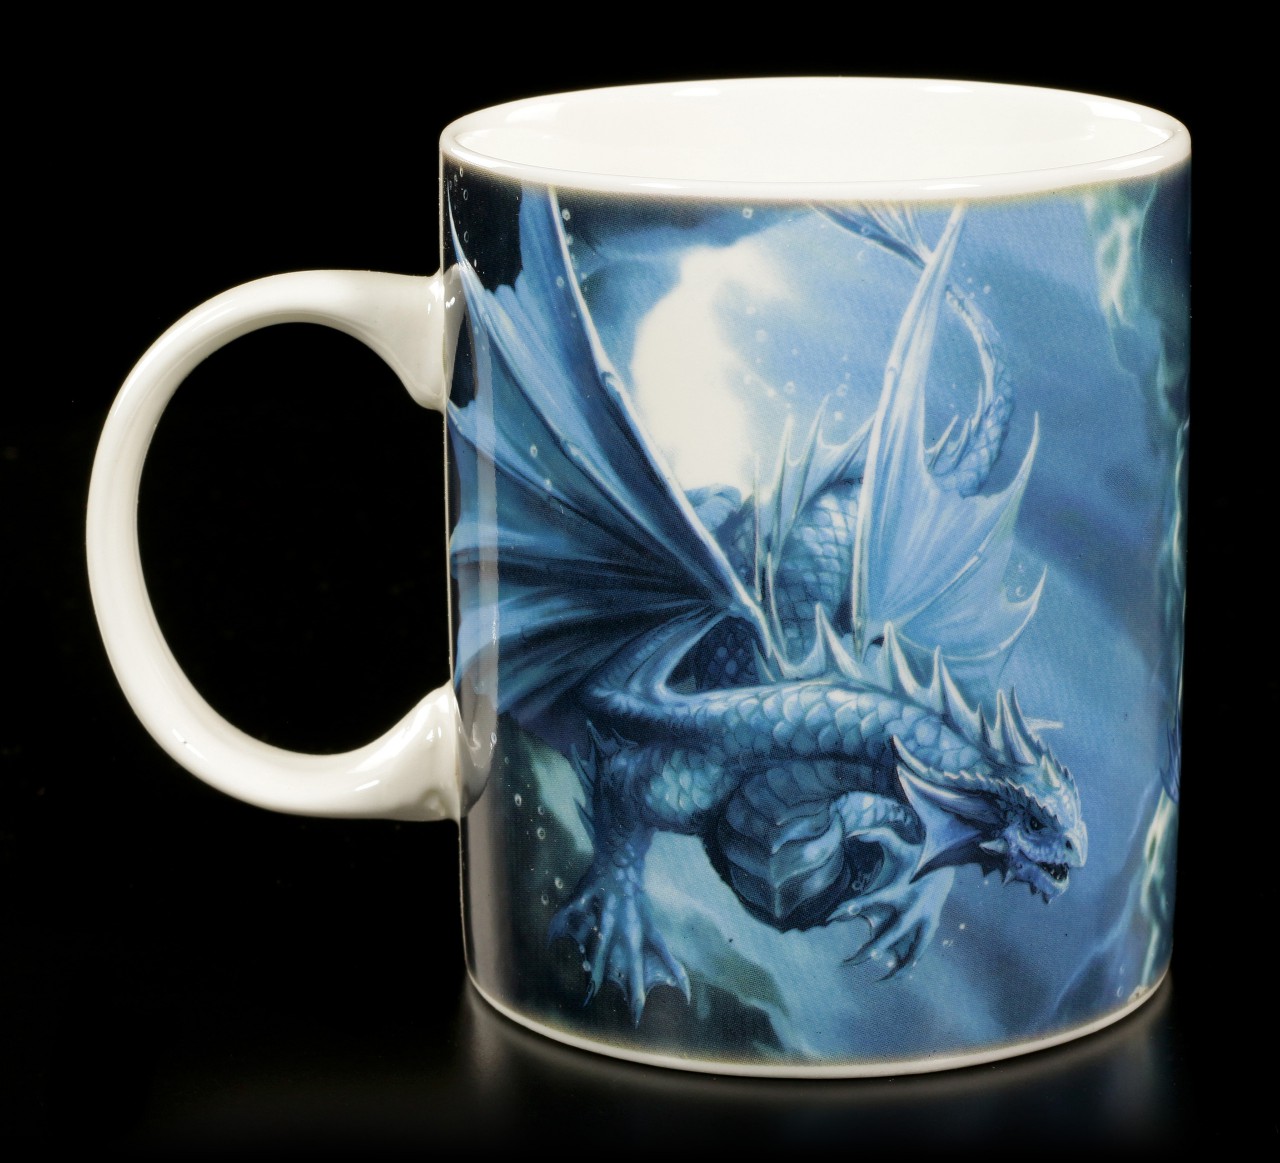 Age of Dragons Mug - Water Dragon